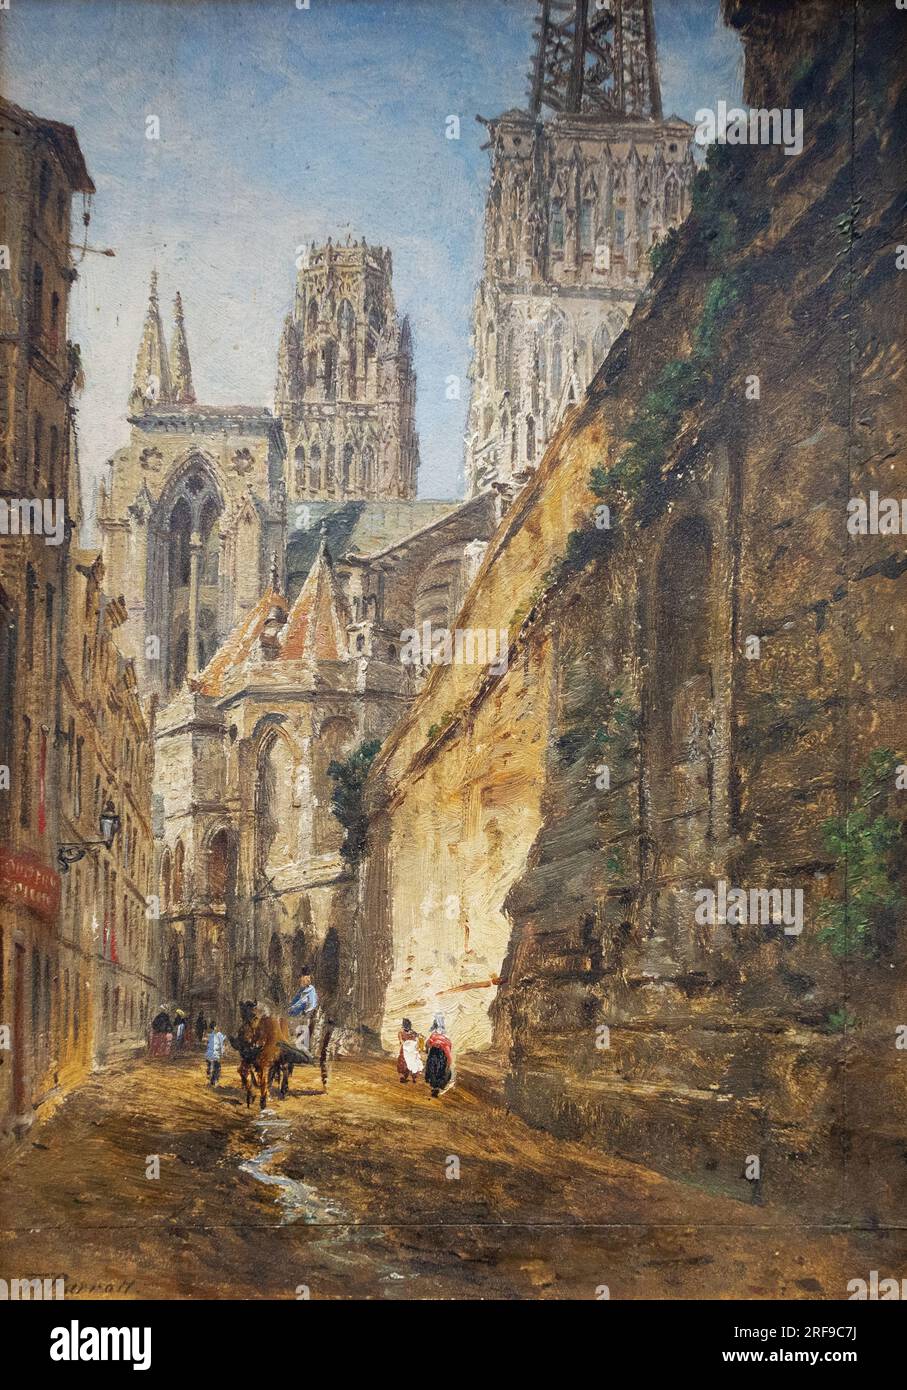 William Parrott painting; Rouen Cathedral c. 1860; 19th century English artist. Stock Photo